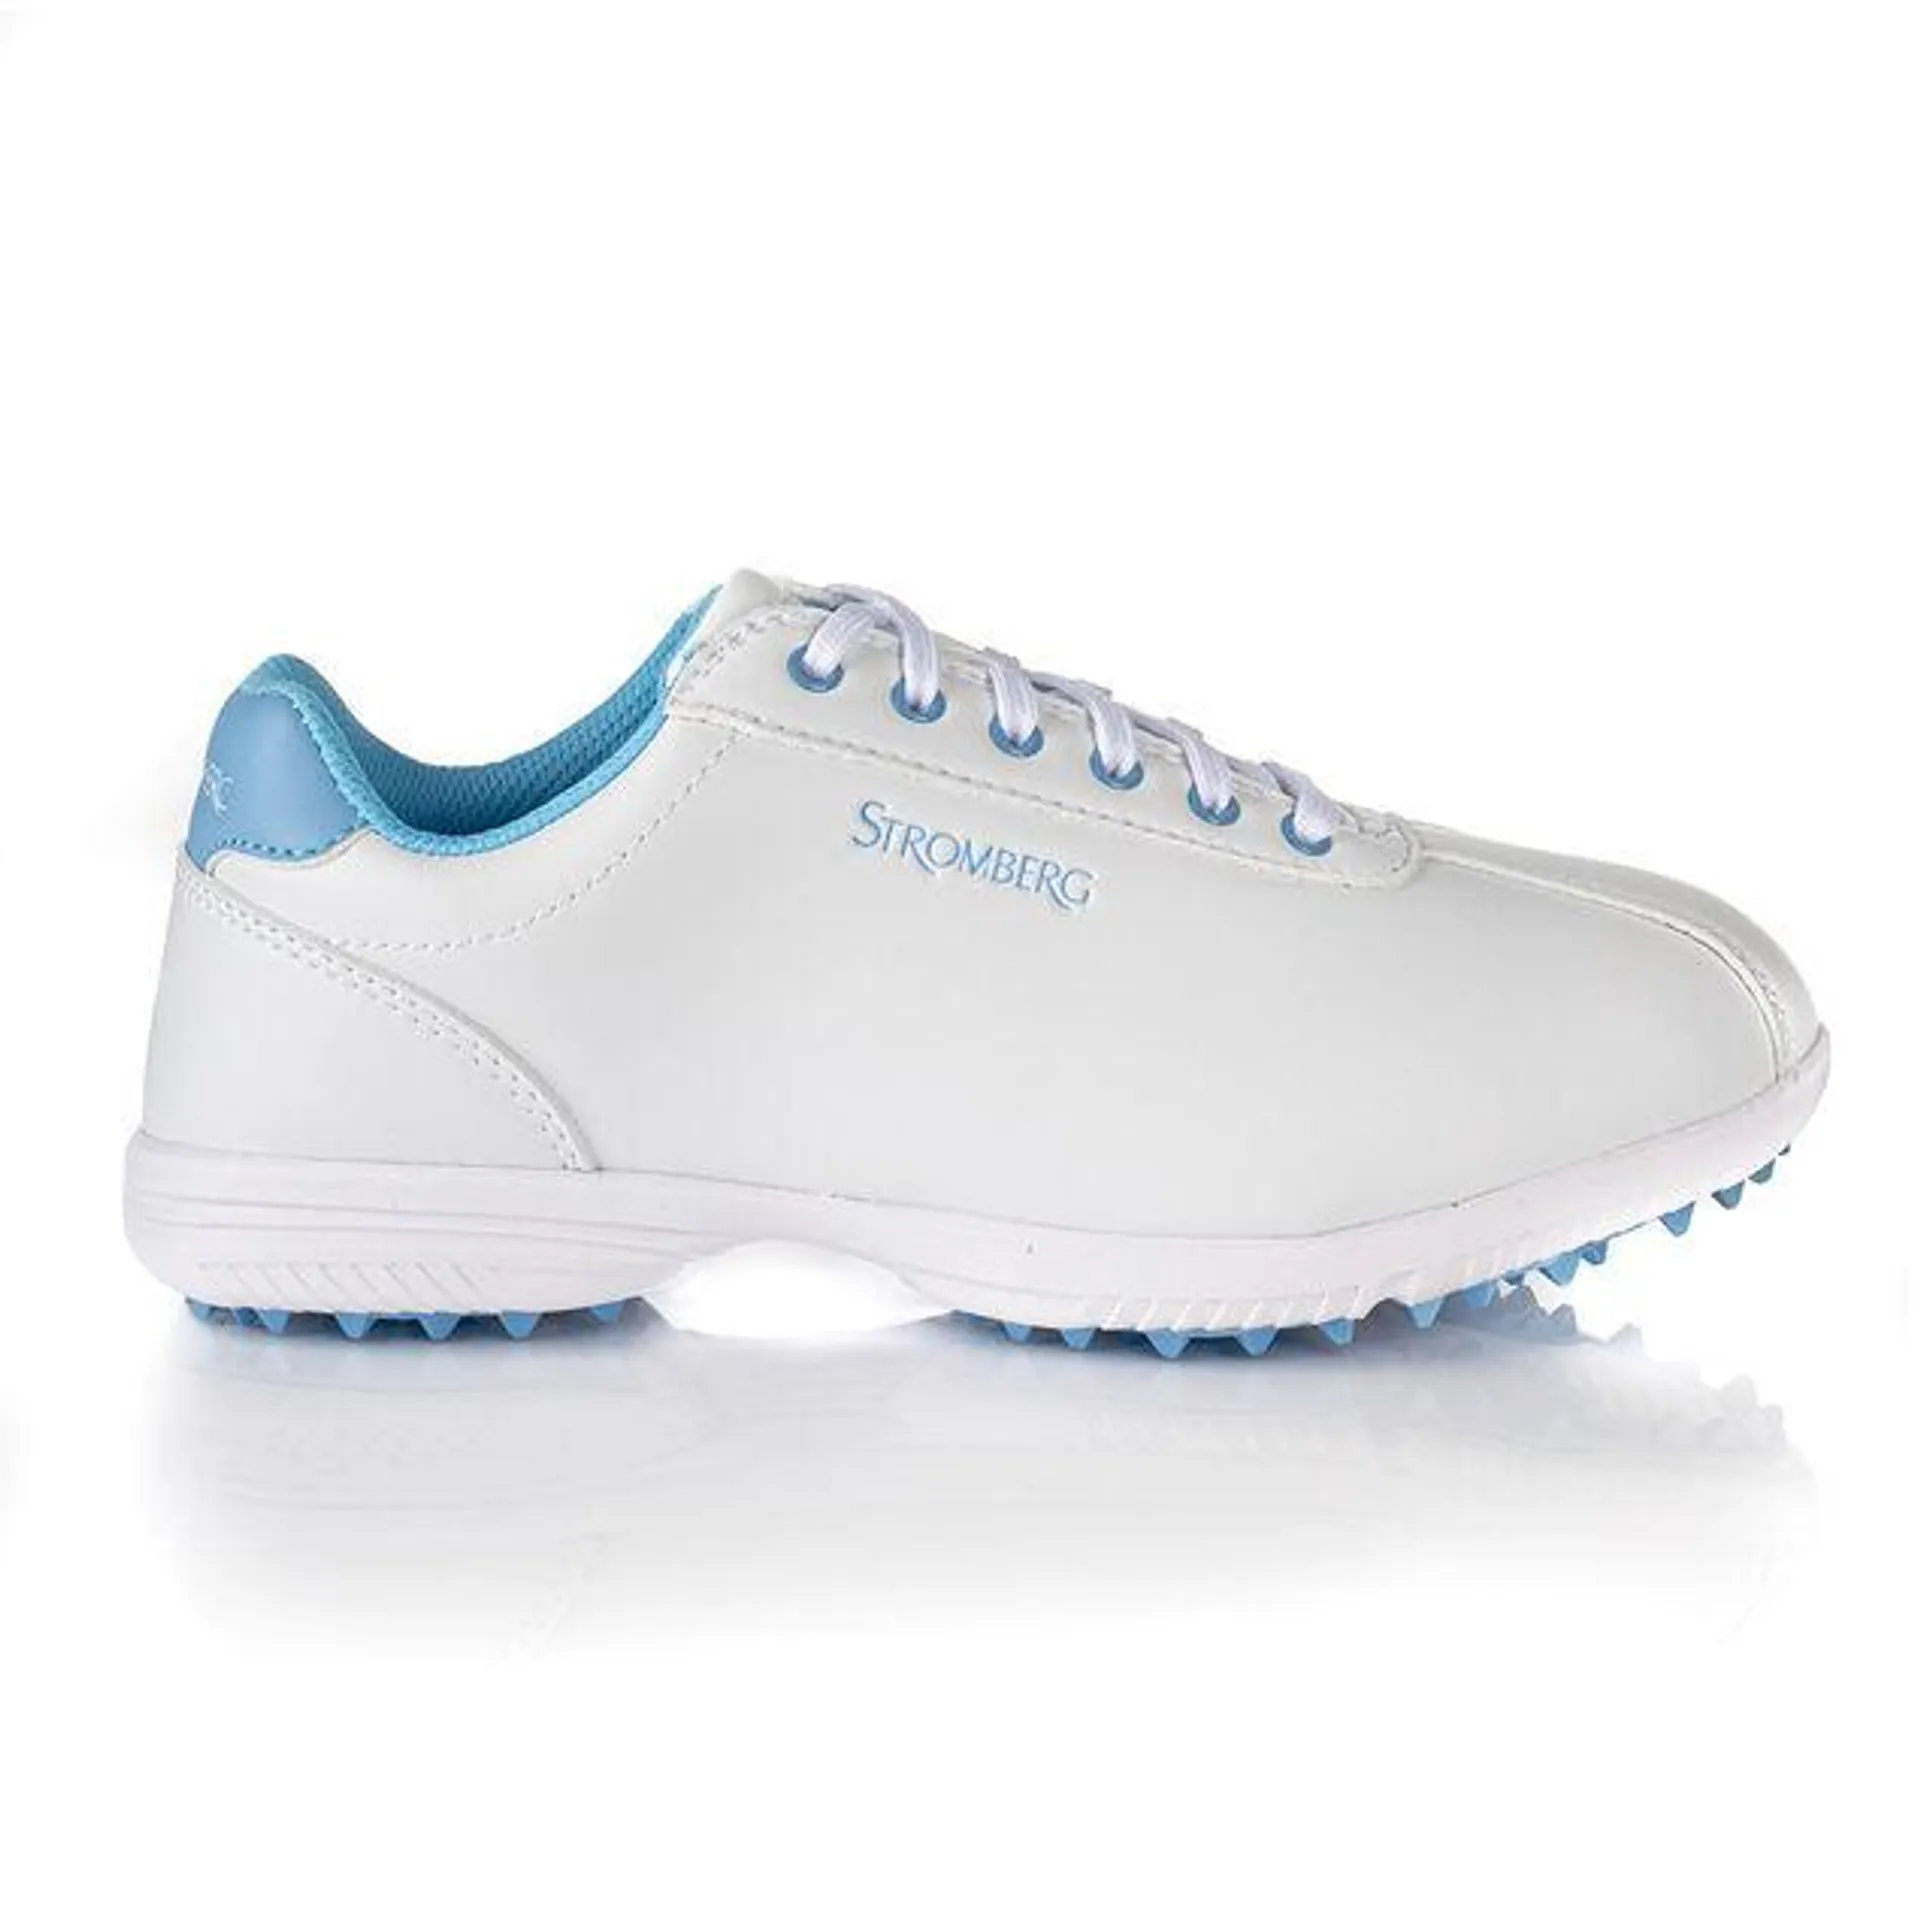 Stromberg Ladies Mia Waterproof Spikeless Golf Shoes